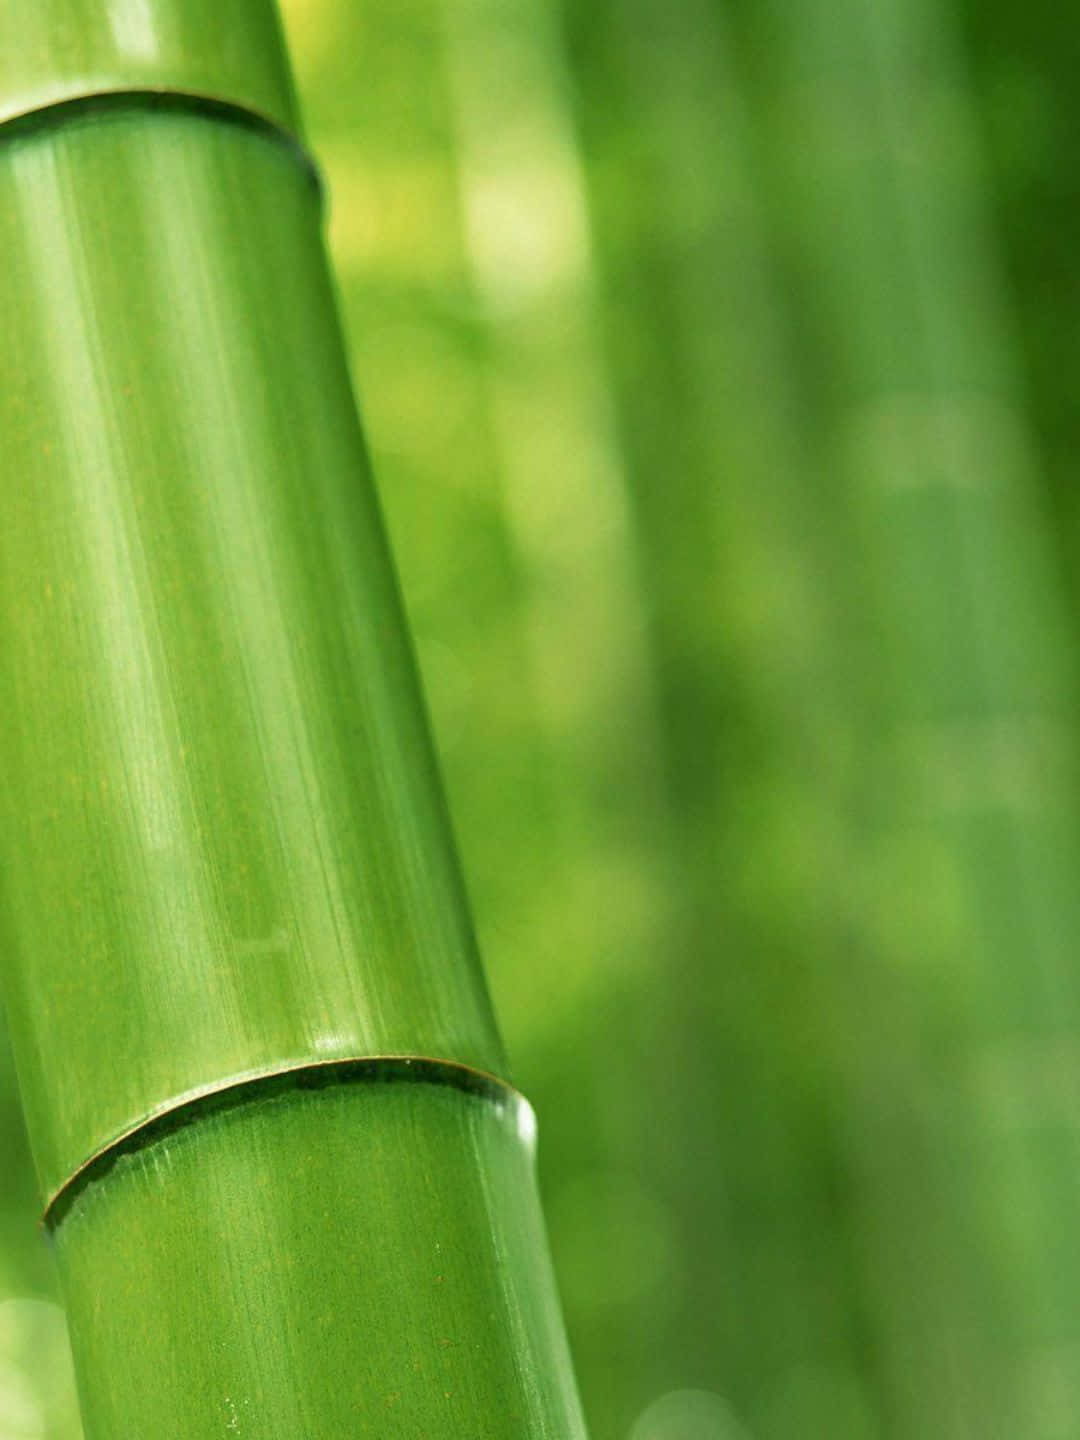 Sfondodi Bambù In 1440p Con Stelo Di Bambù Riflettente.